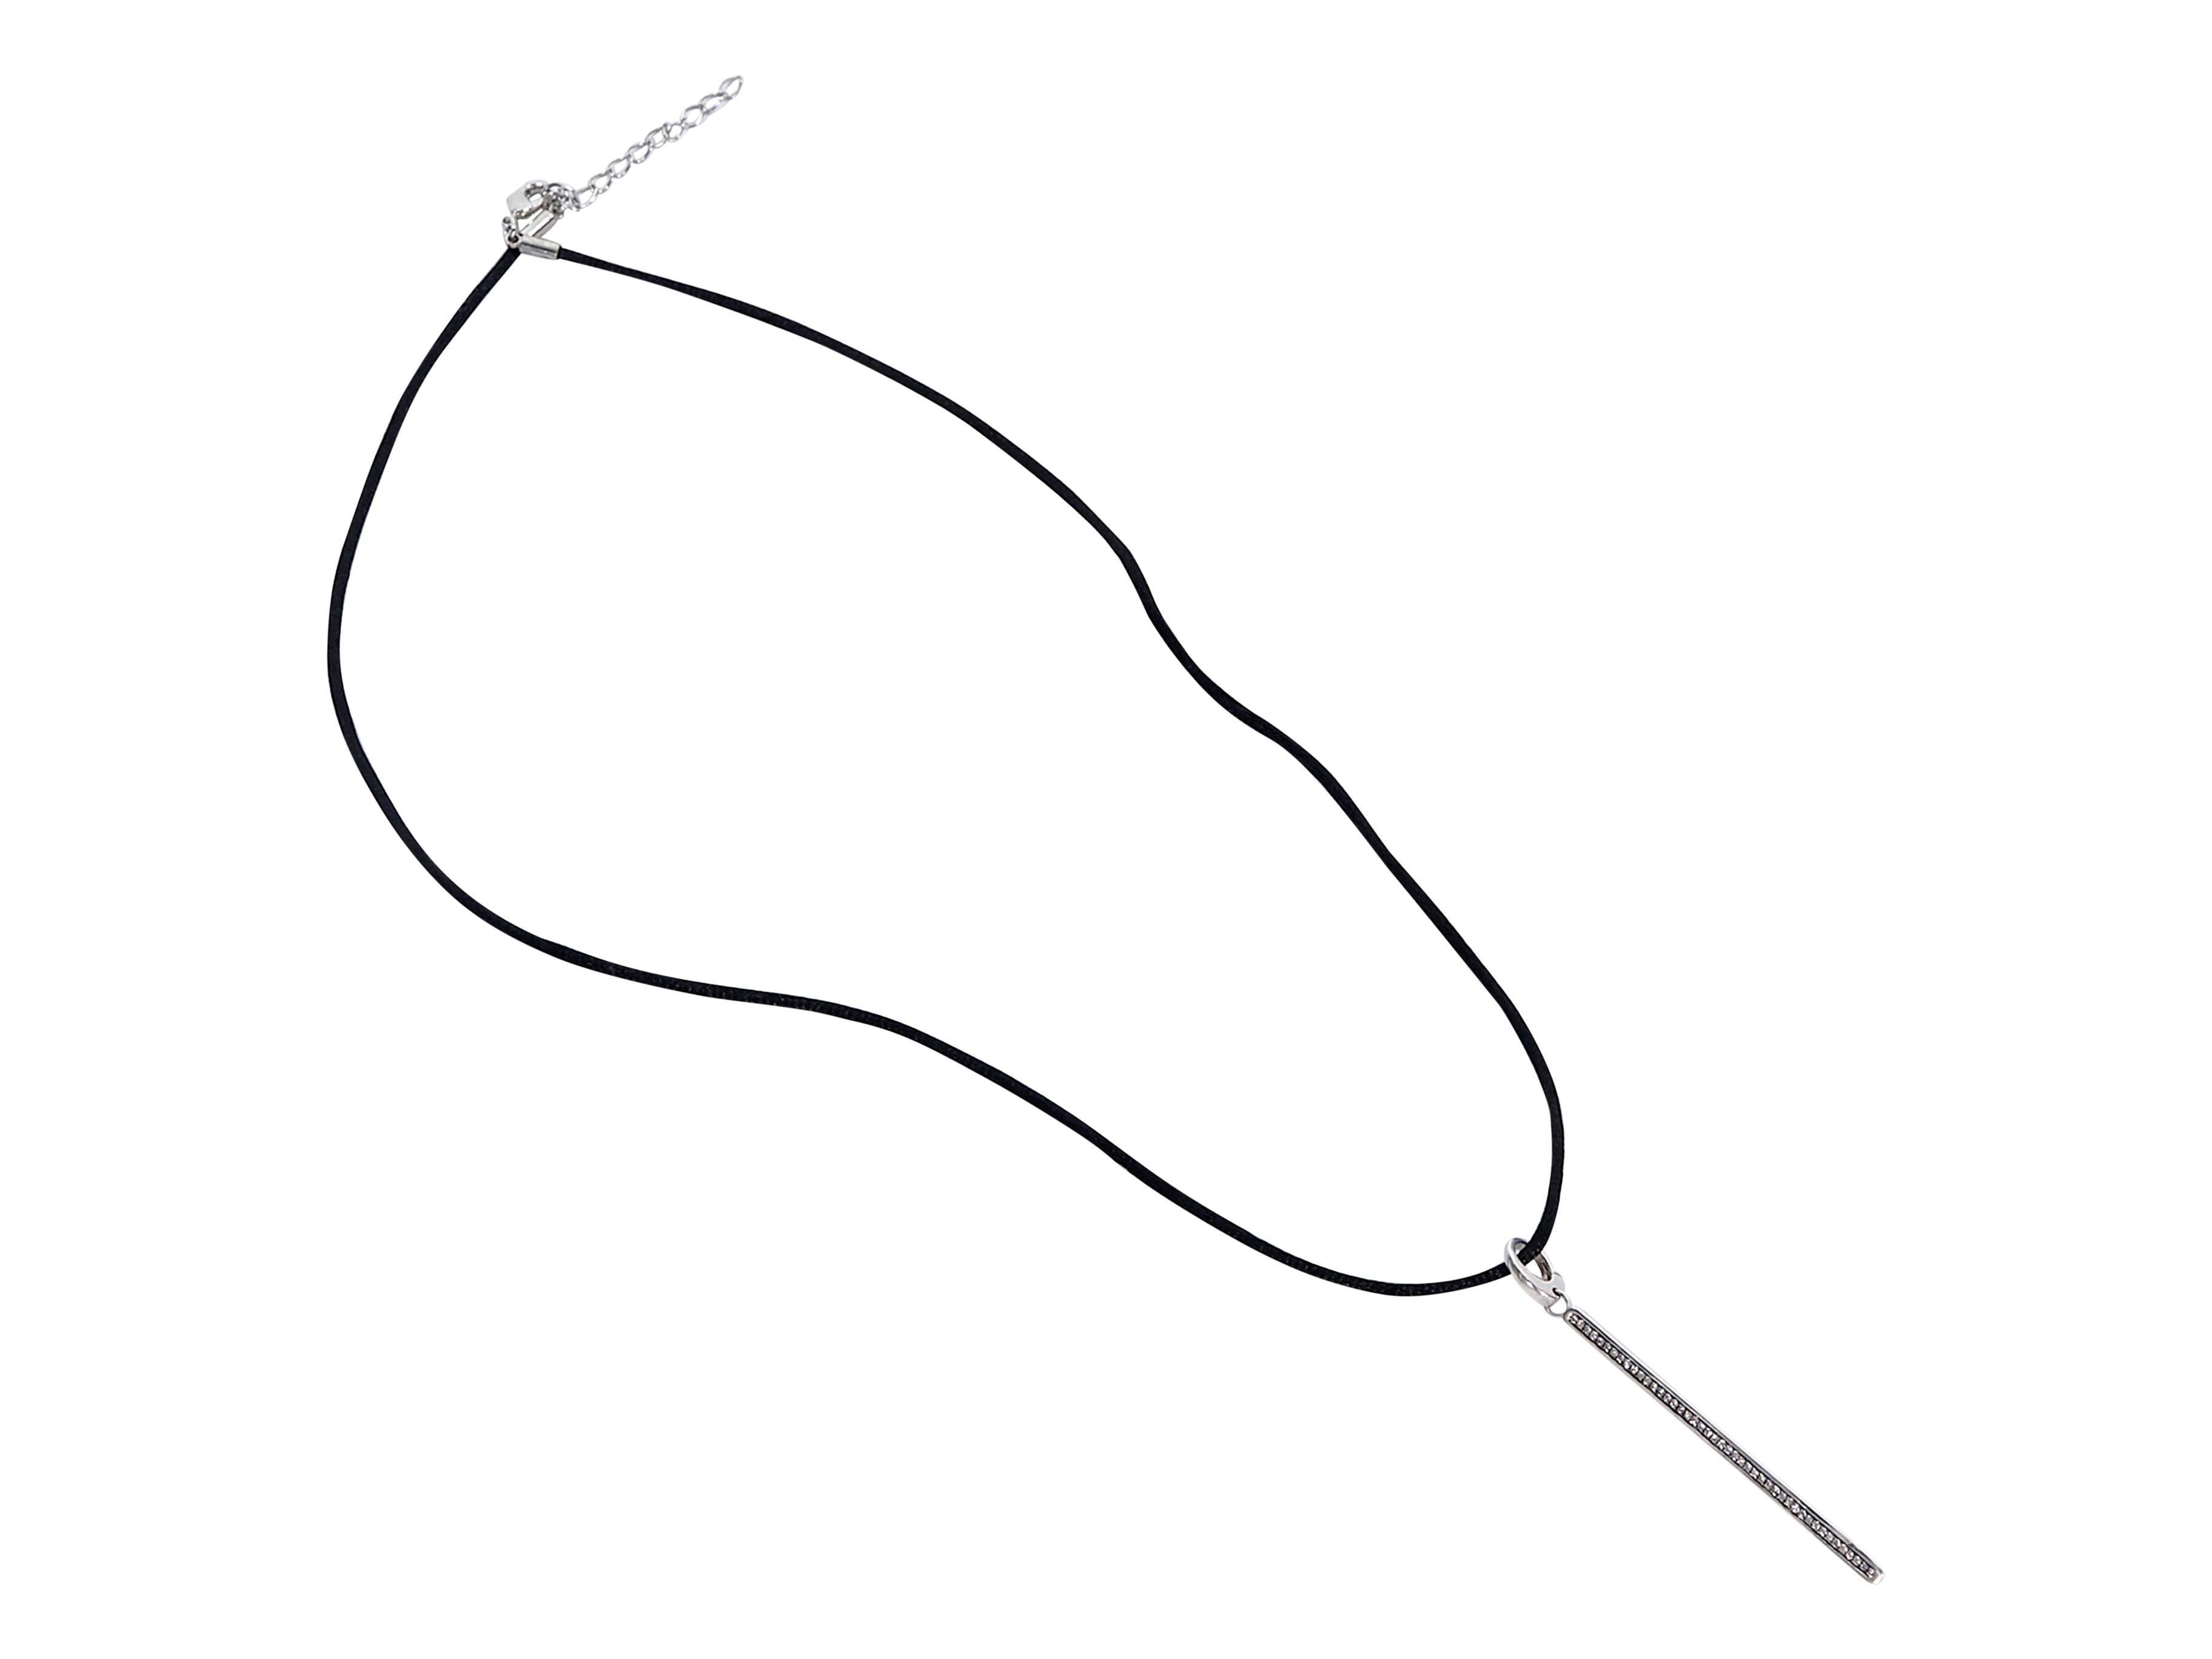 Product details:  Silvertone diamond bar pendant necklace by Ippolita.  Adjustable lobster clasp closure.  Silvertone hardware.  23